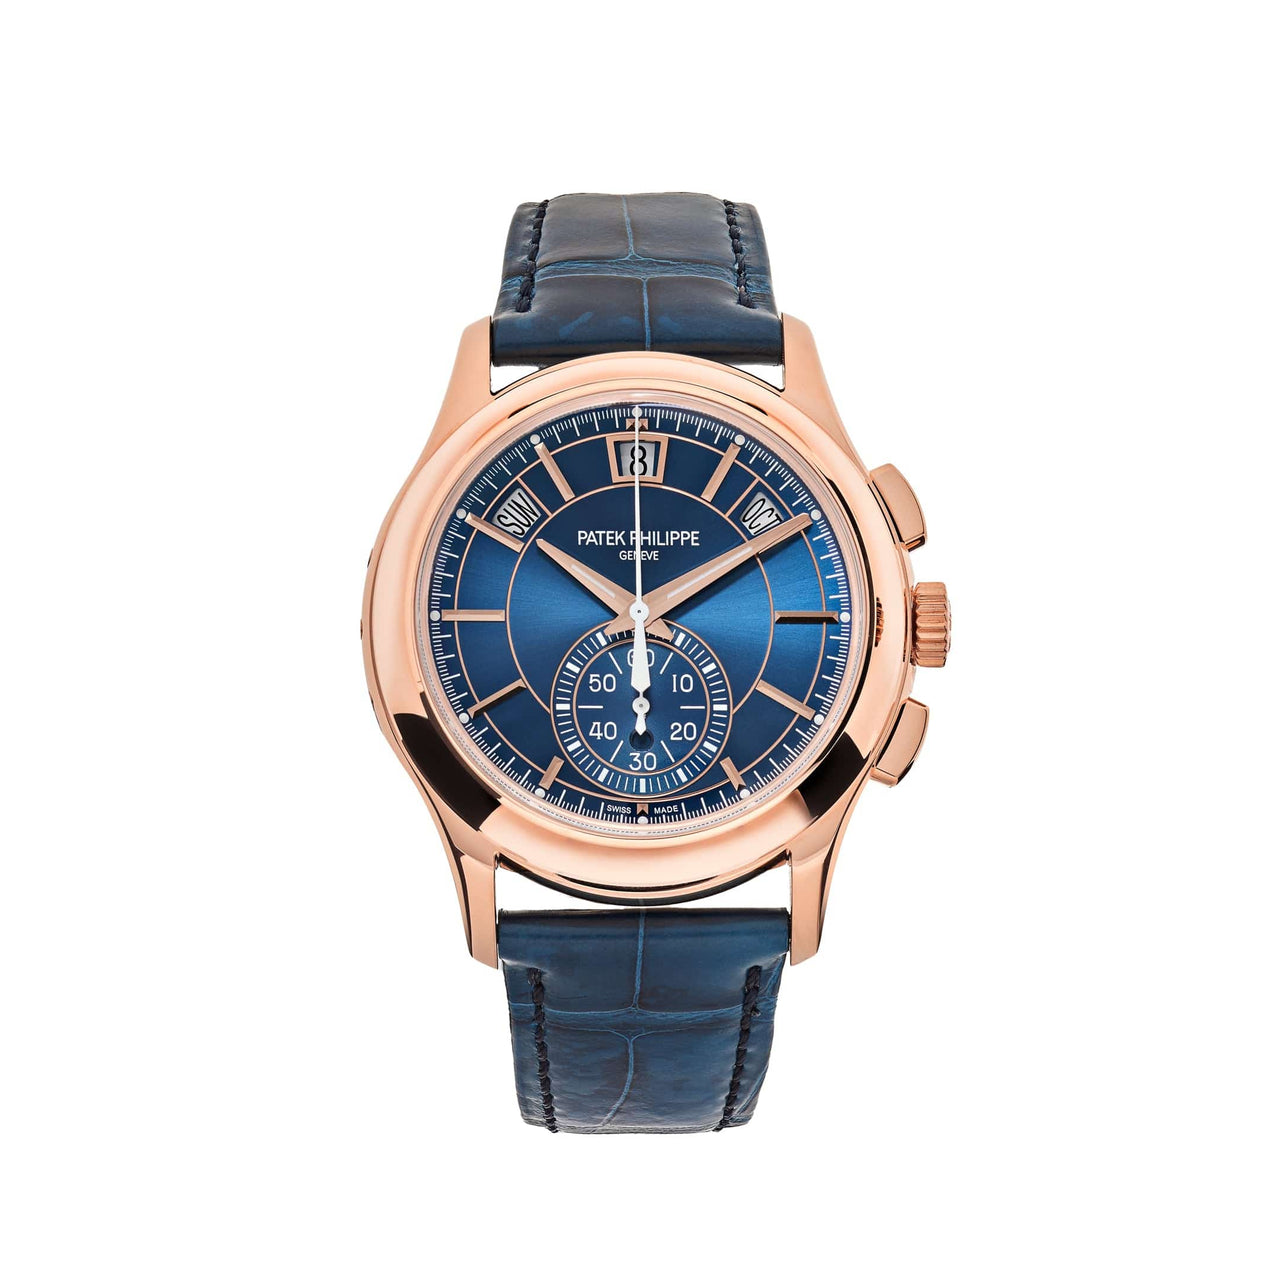 Patek Philippe Complications Chronograph Annual Calendar Blue Dial 5905R-010 Wrist Aficionado